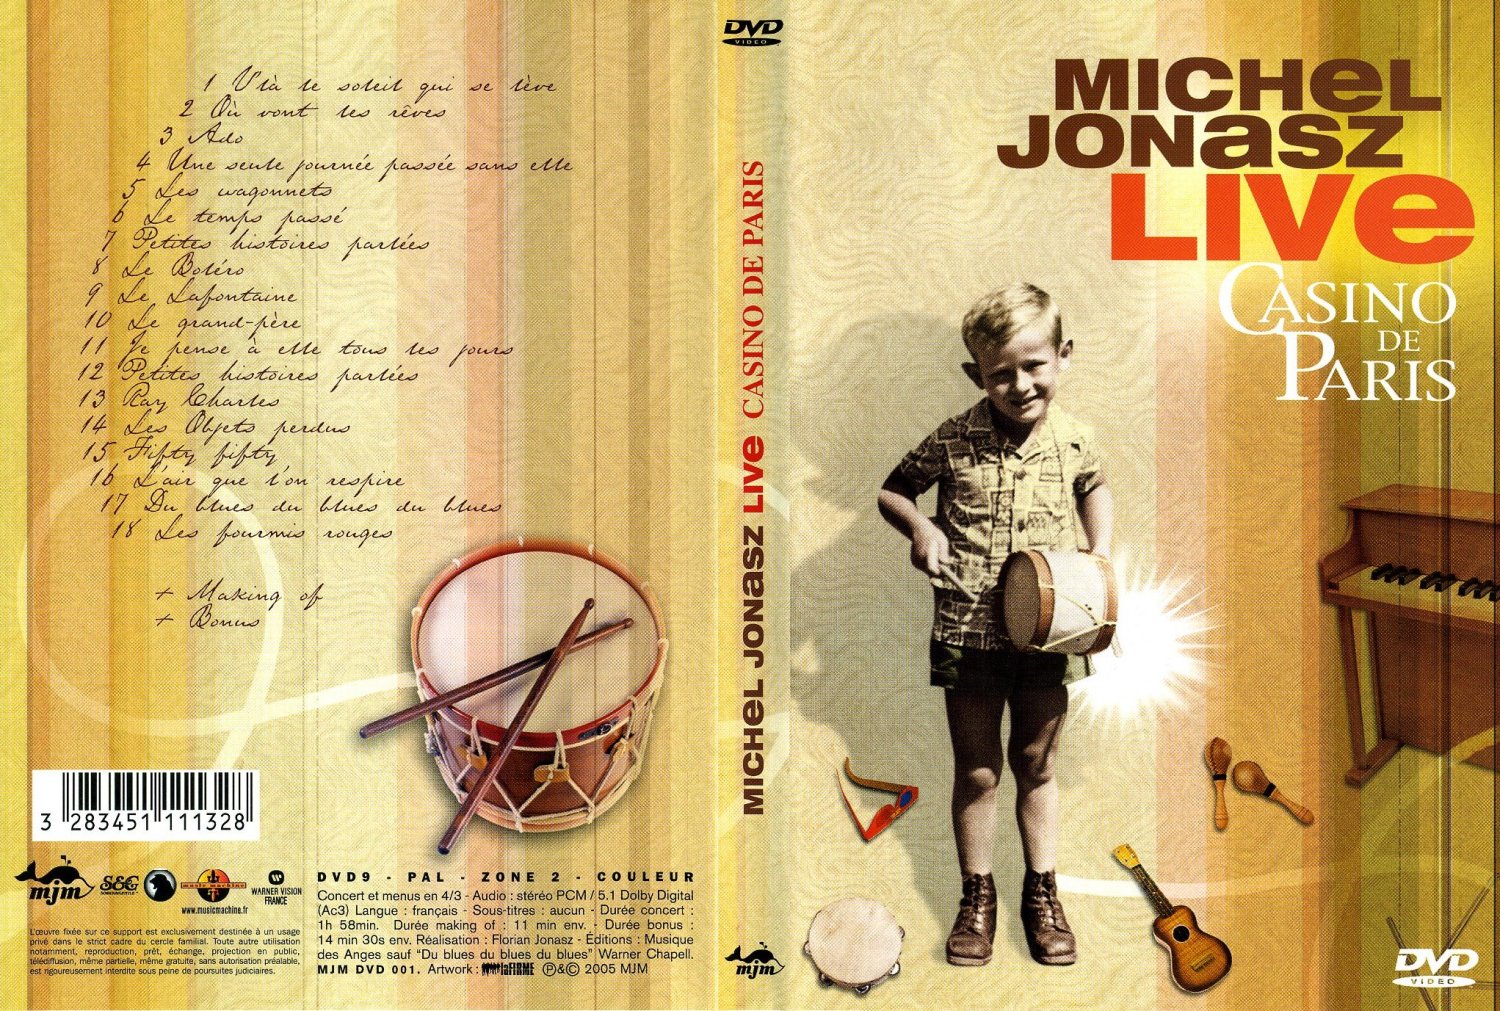 Jaquette DVD Michel Jonasz live casino paris